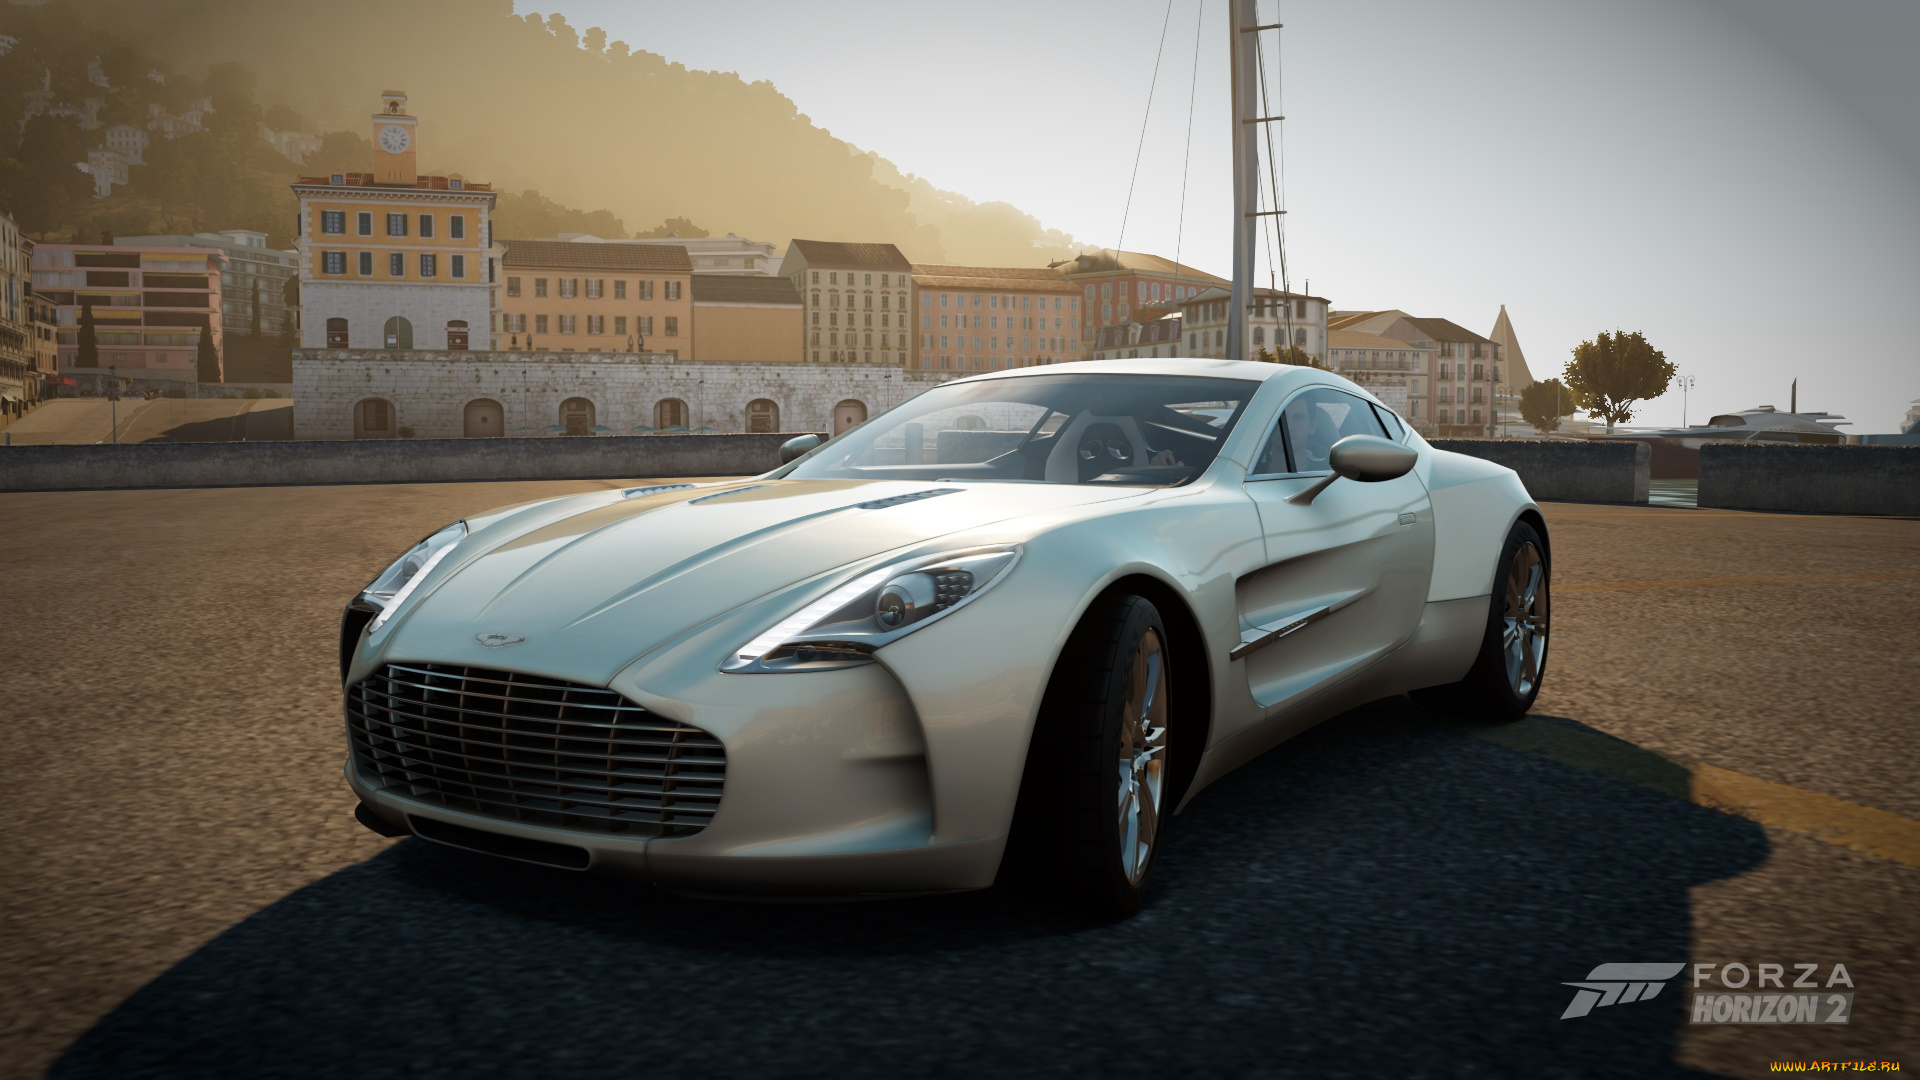 Horizon 2. Форза хорайзен 2 машины. Aston Martin в Forza Horizon 2. Астон Мартин оне 77 Форза хорайзон винилы. Forza Horizon 2 видео.